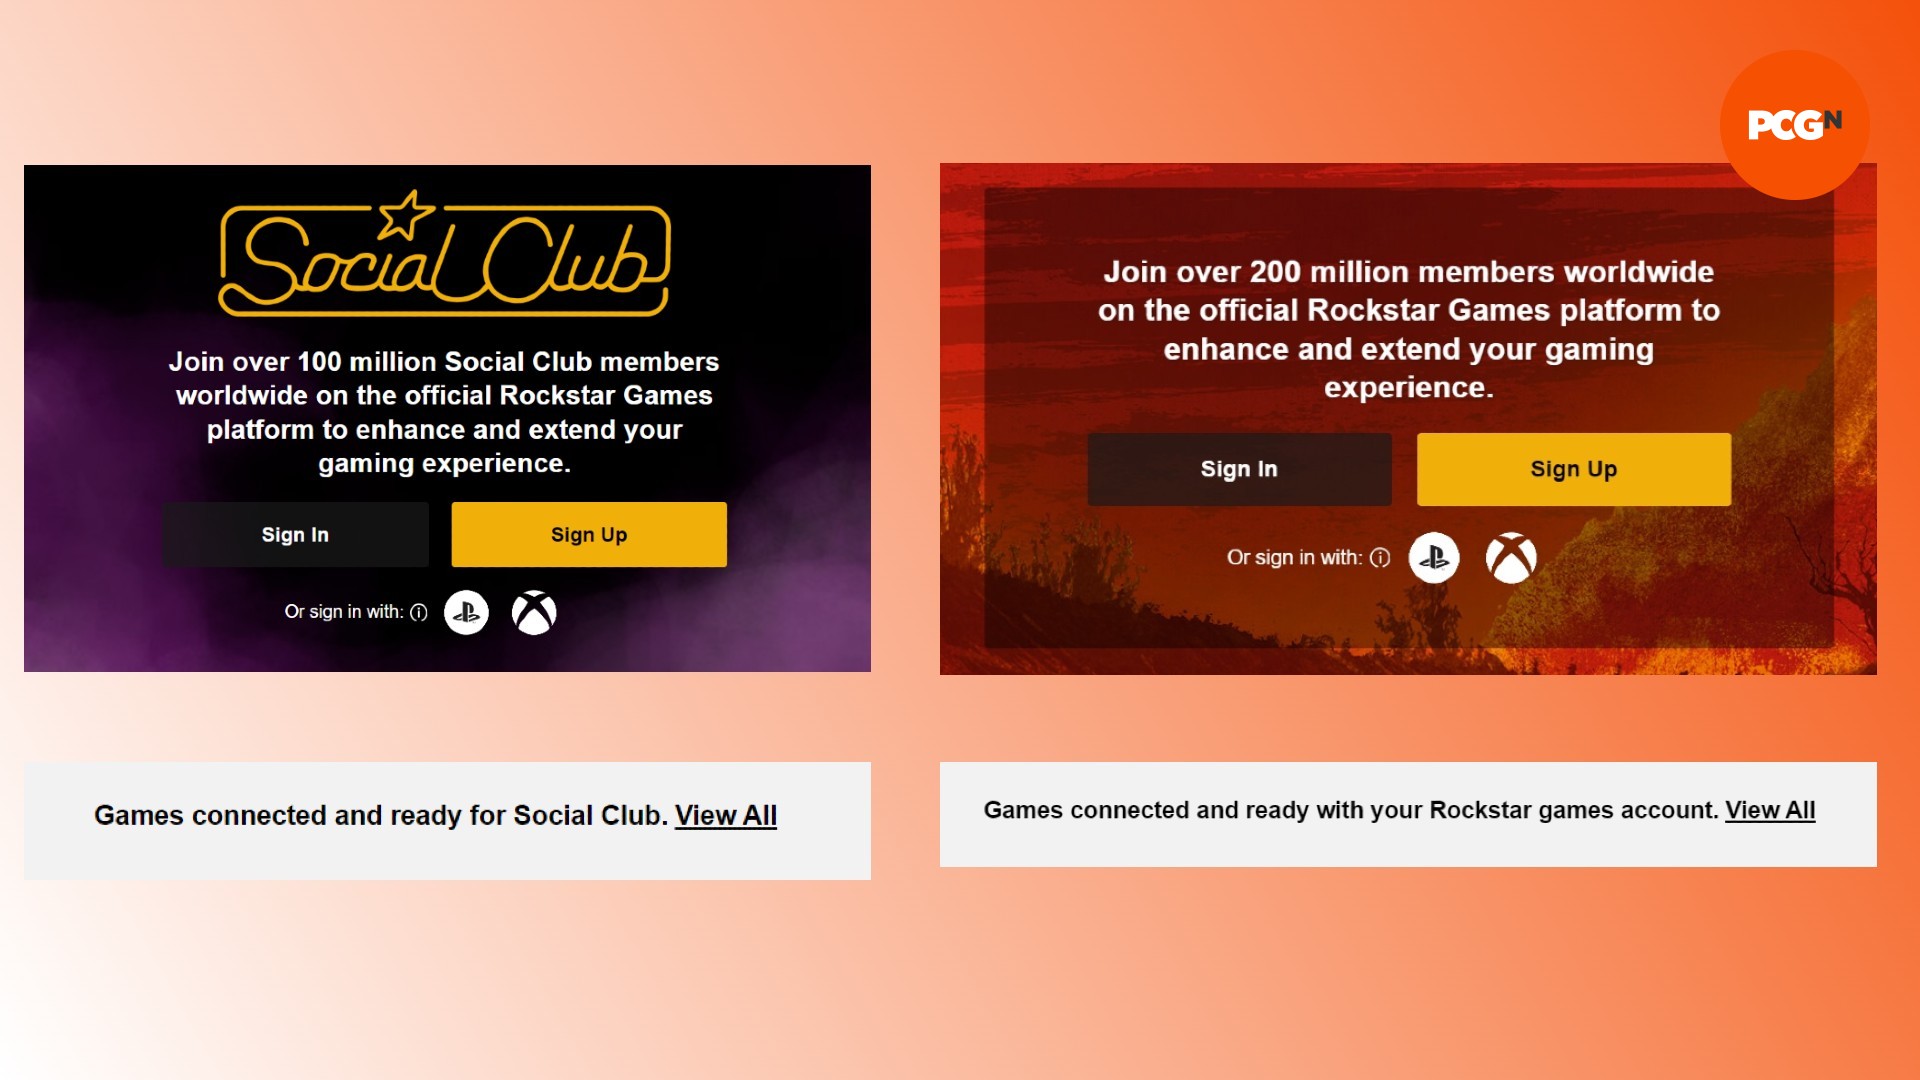 GTA 6 Rockstar Social Club: Ein Vergleich zwischen Versionen des Rockstar Social Club vor GTA 6